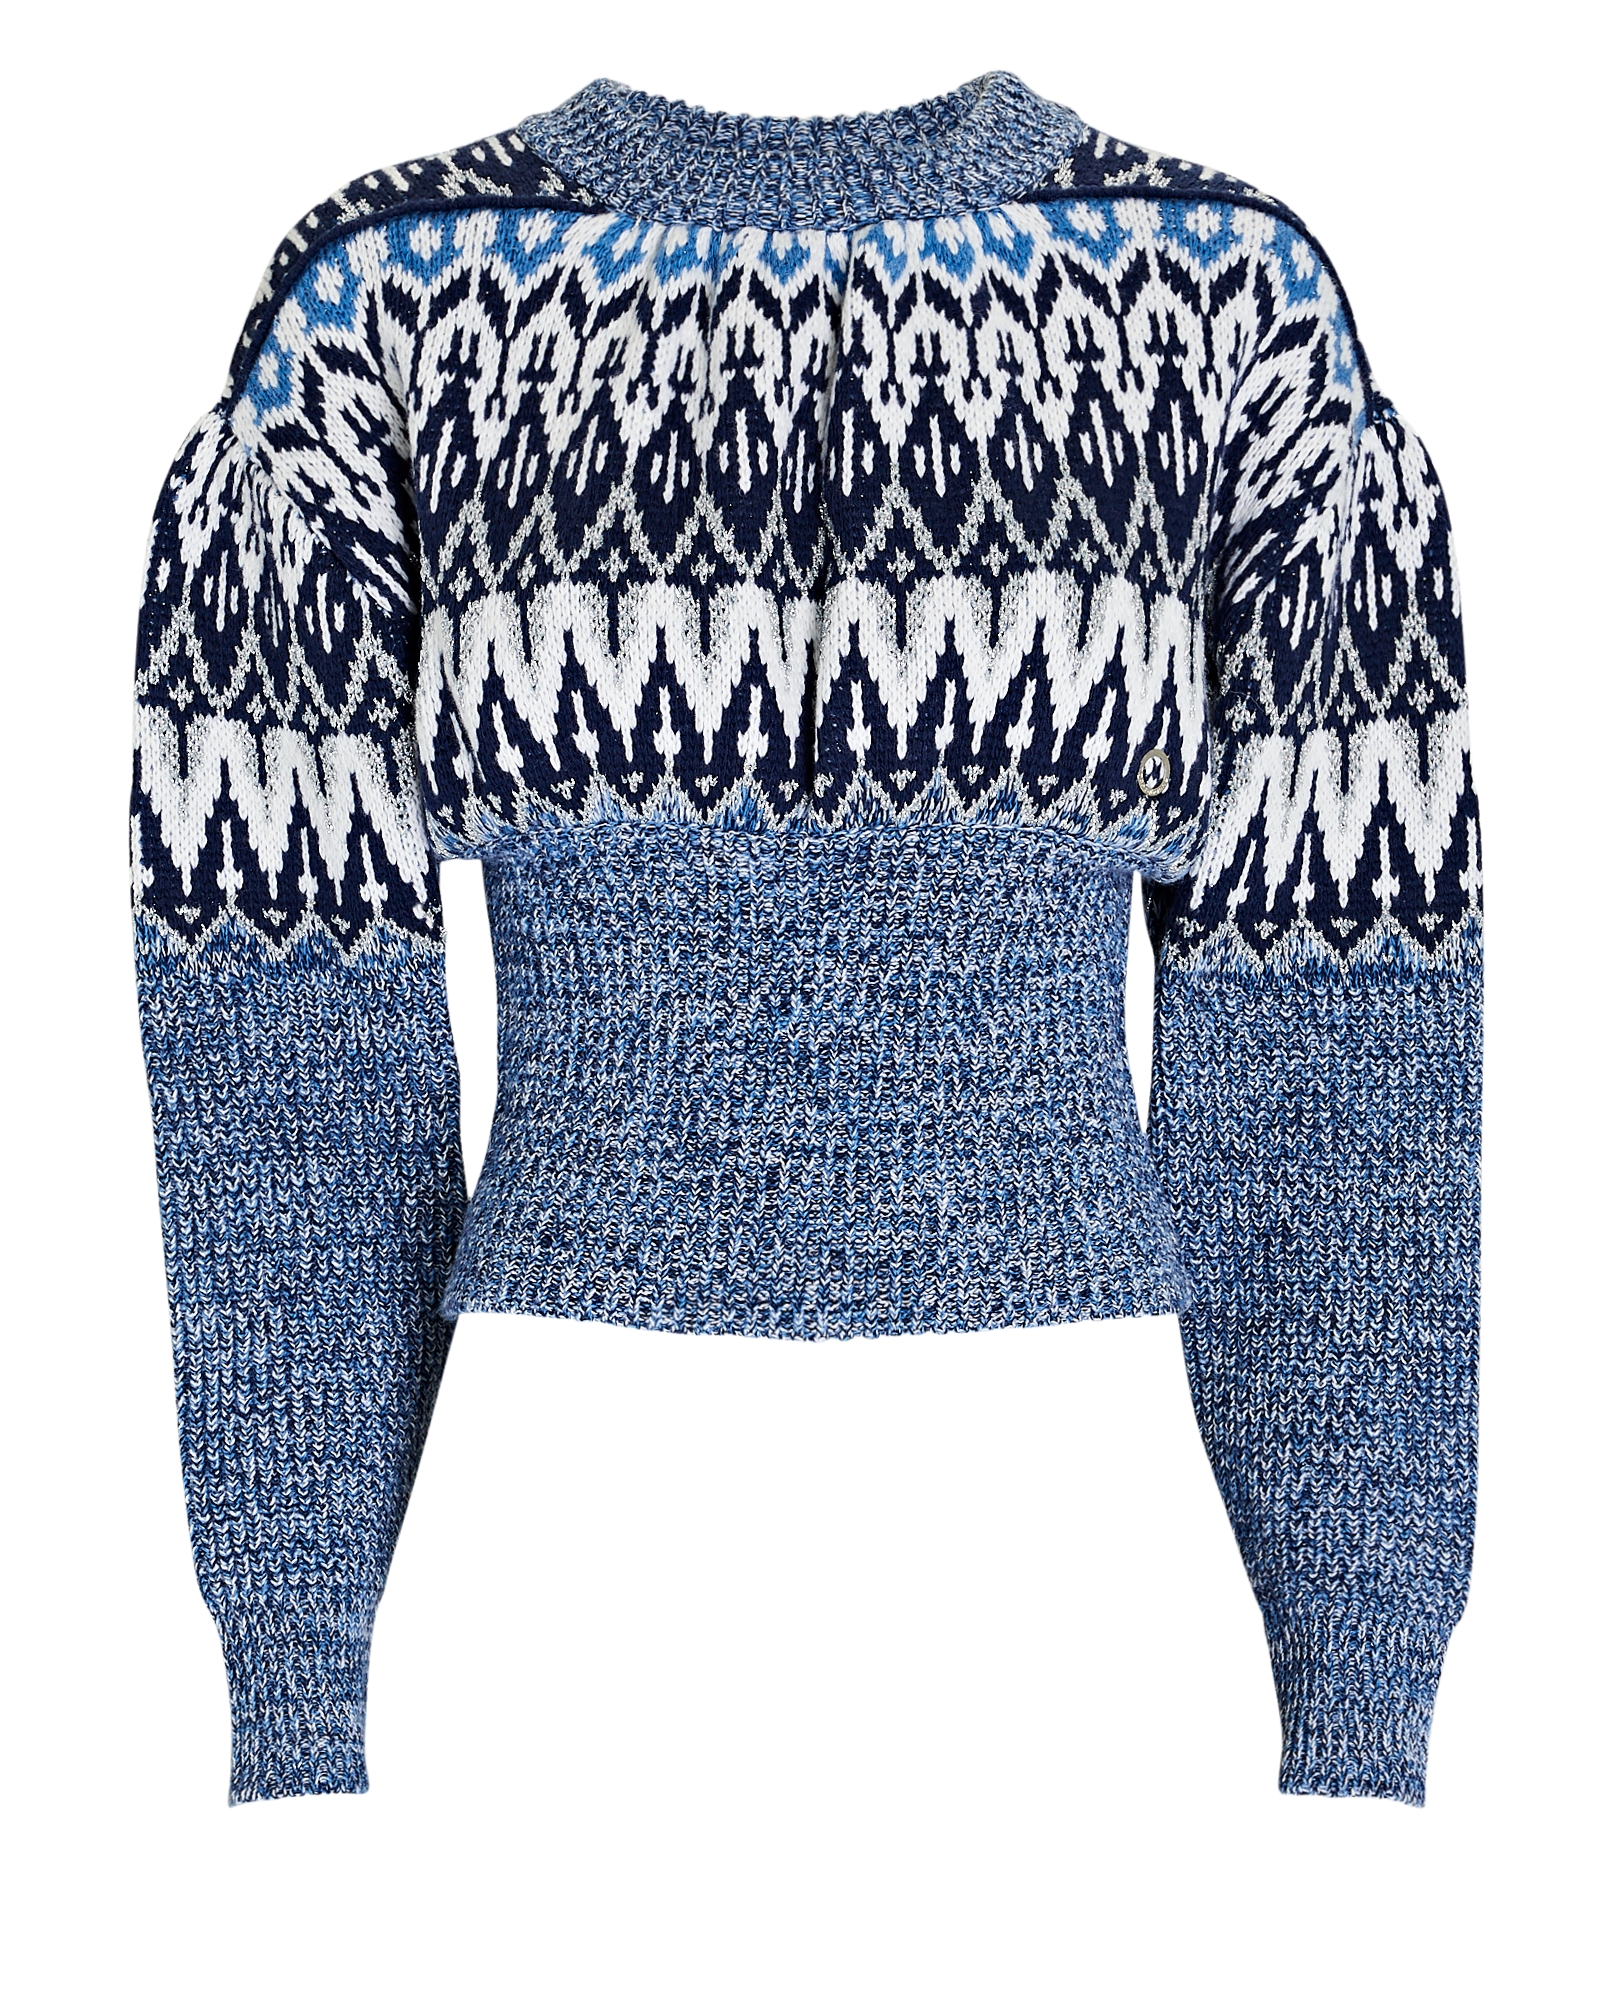 Paco Rabanne Icelandic Print Wool-Blend Sweater | INTERMIX®